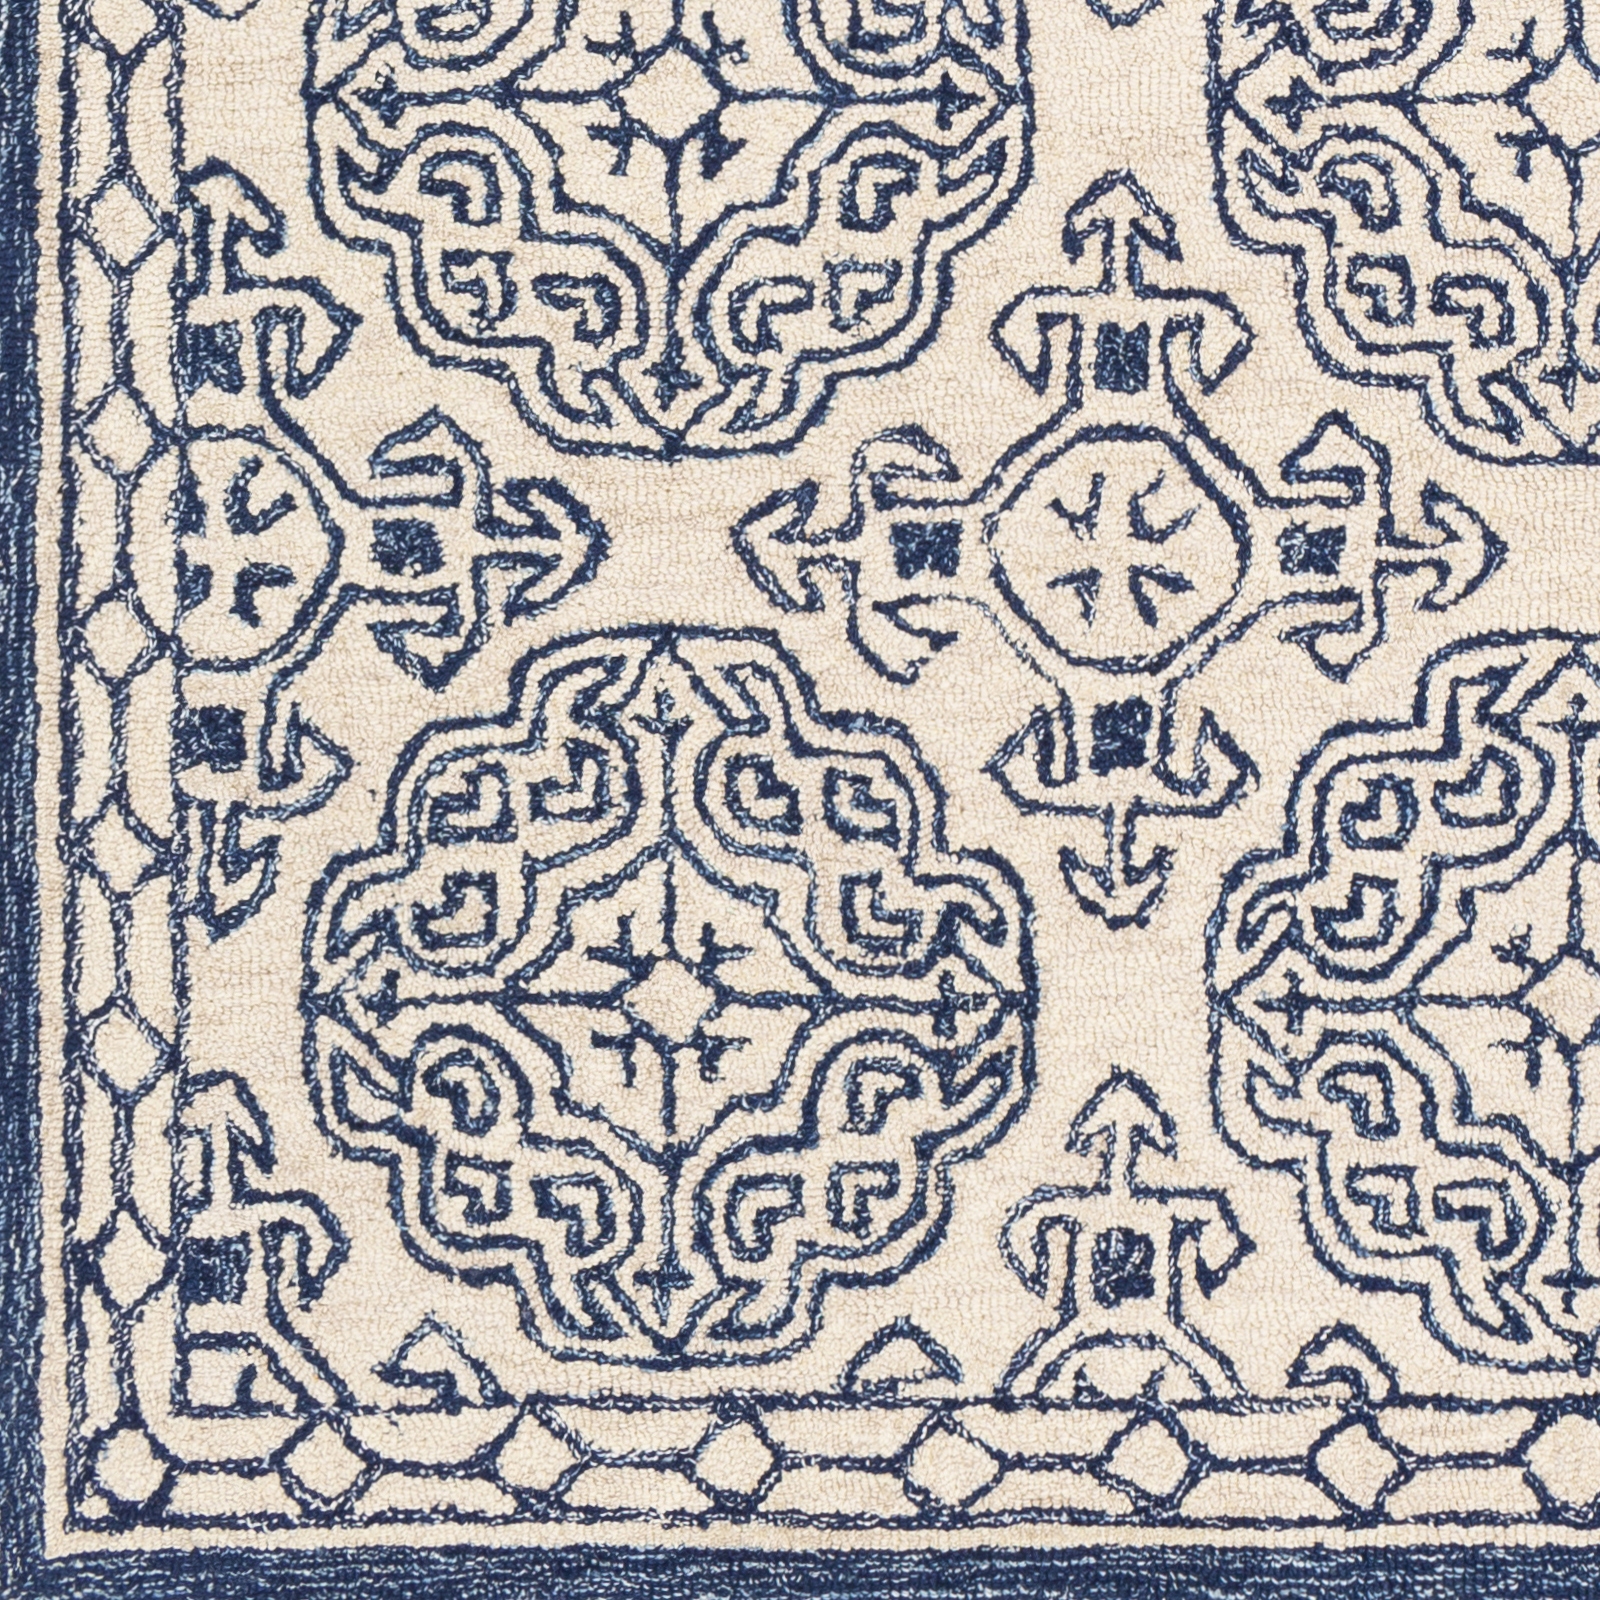 Granada Rug, 6' x 9' - Image 5